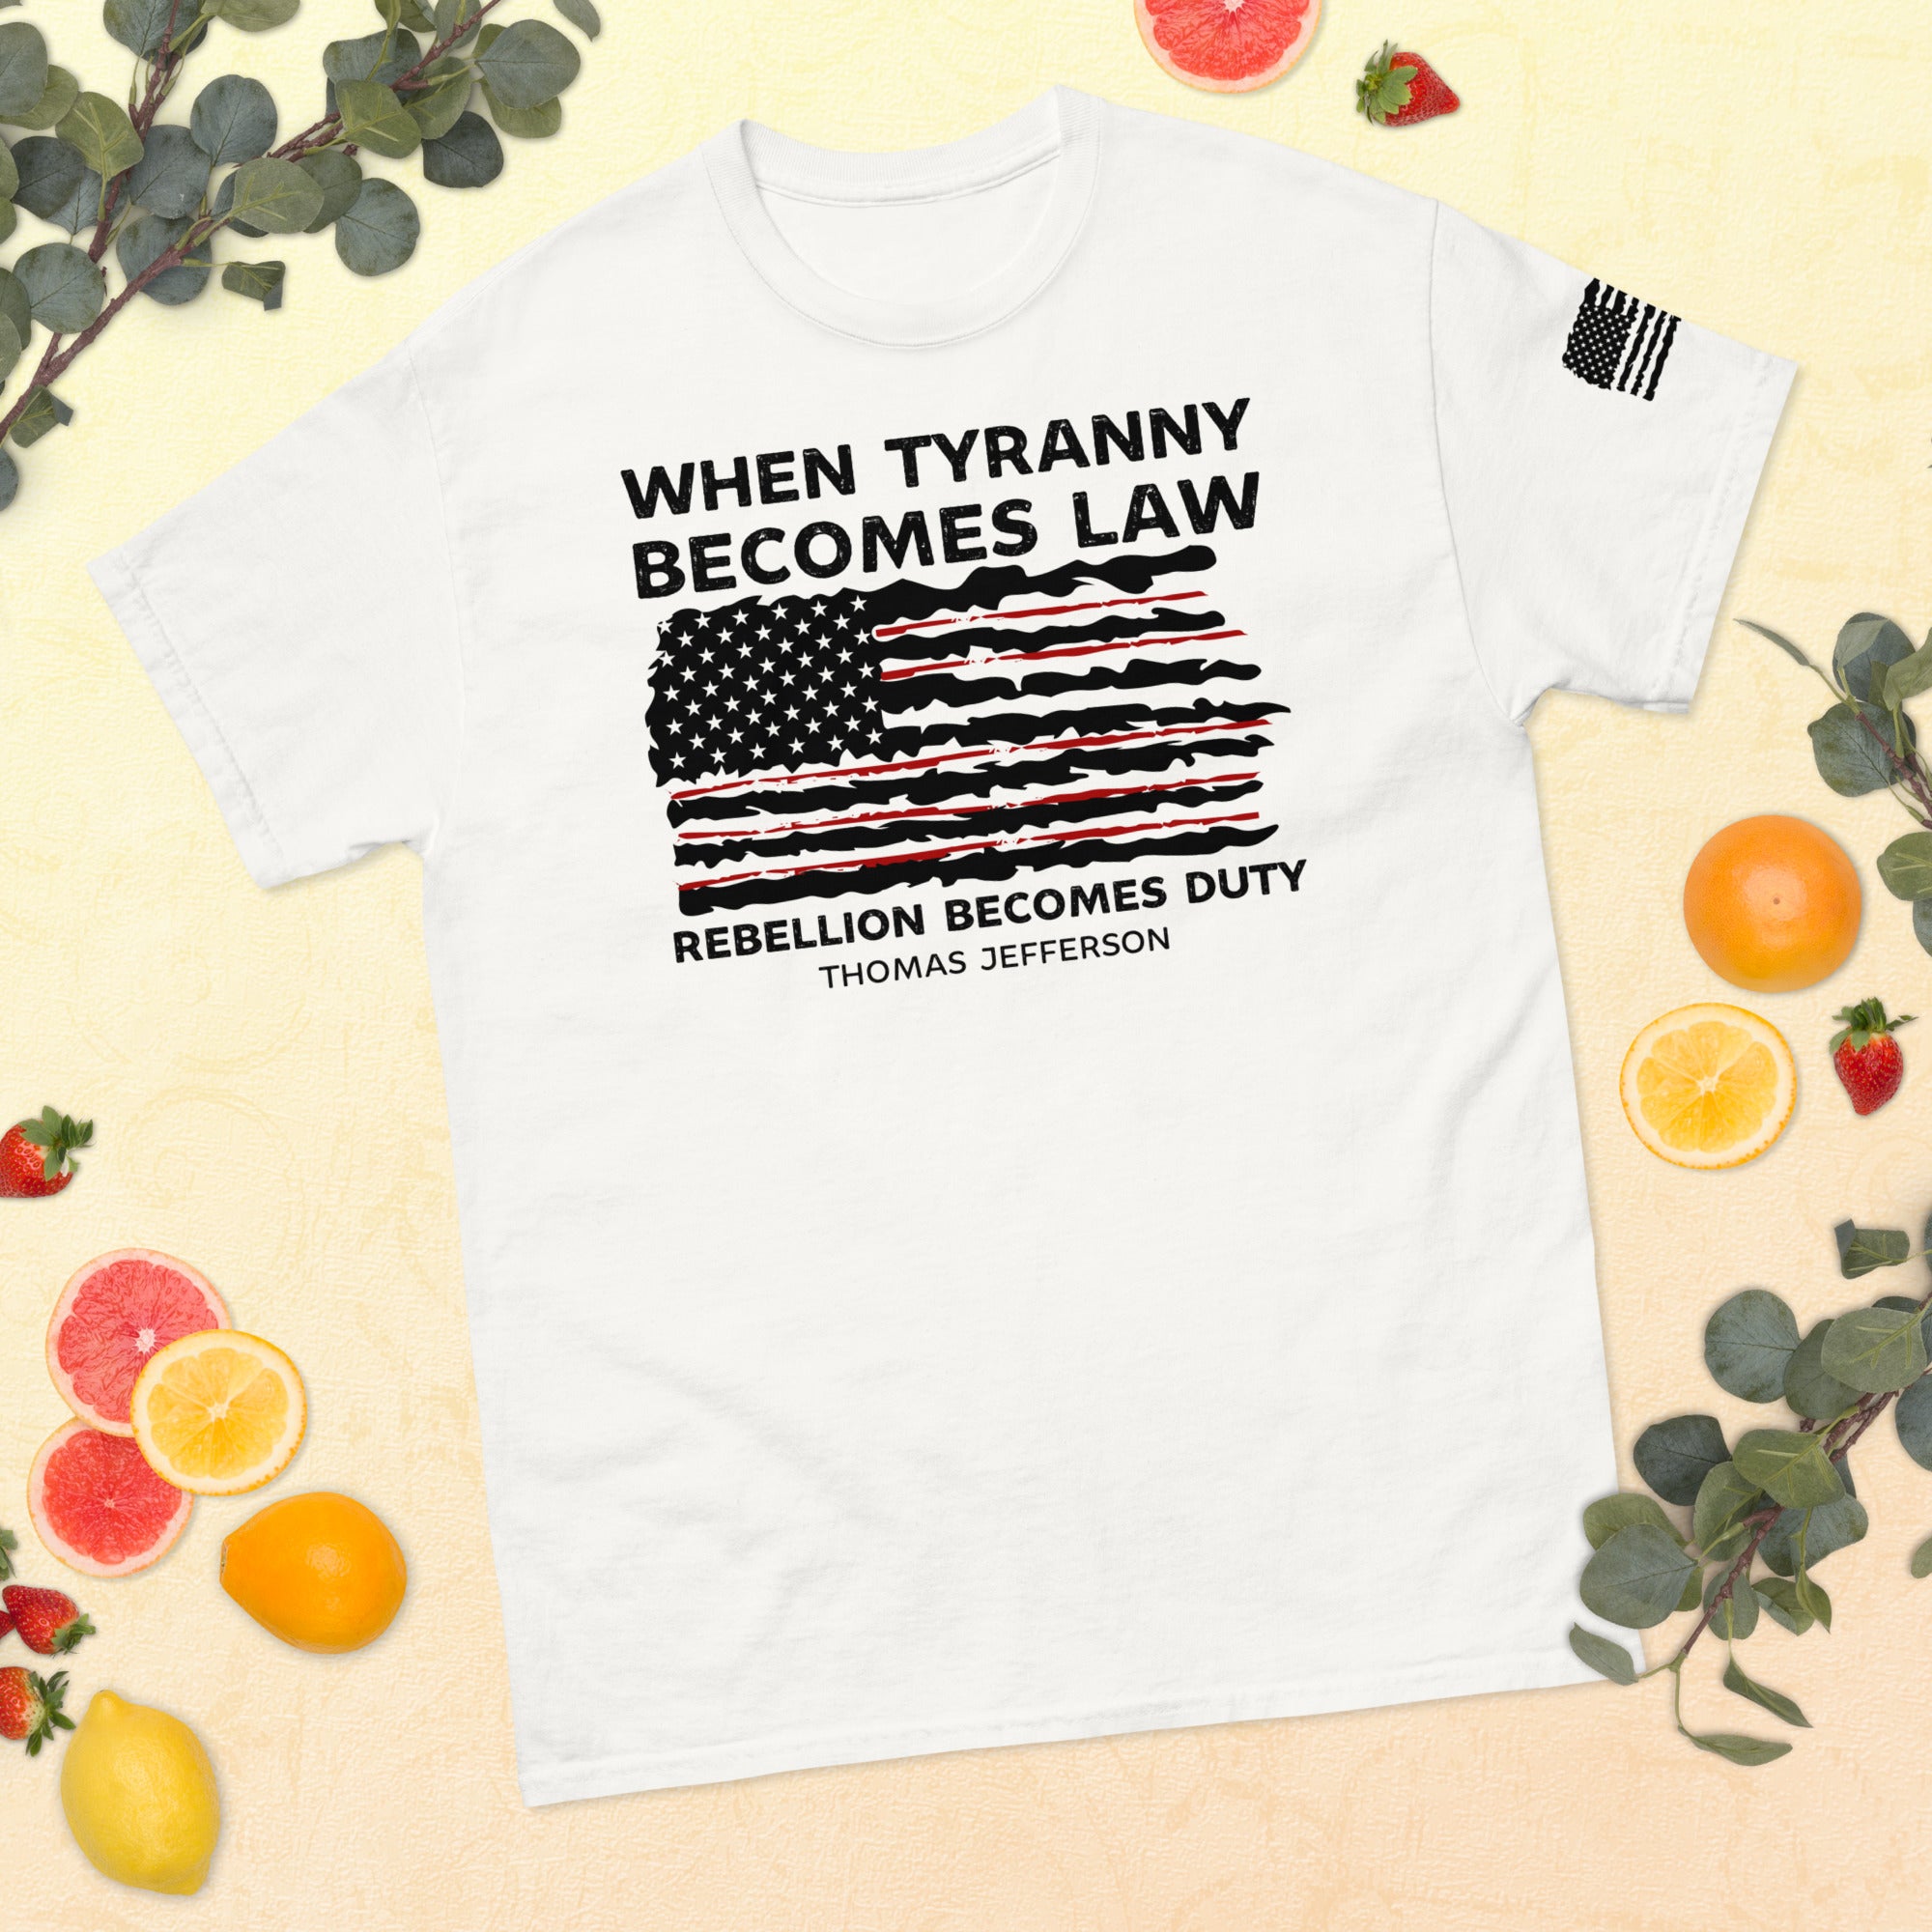 When Tyranny Becomes Law, Rebellion Becomes Duty, 1776 Shirt, Thomas Jefferson Shirt, Political Shirts, Tyranny Shirt, Rebellion Shirt